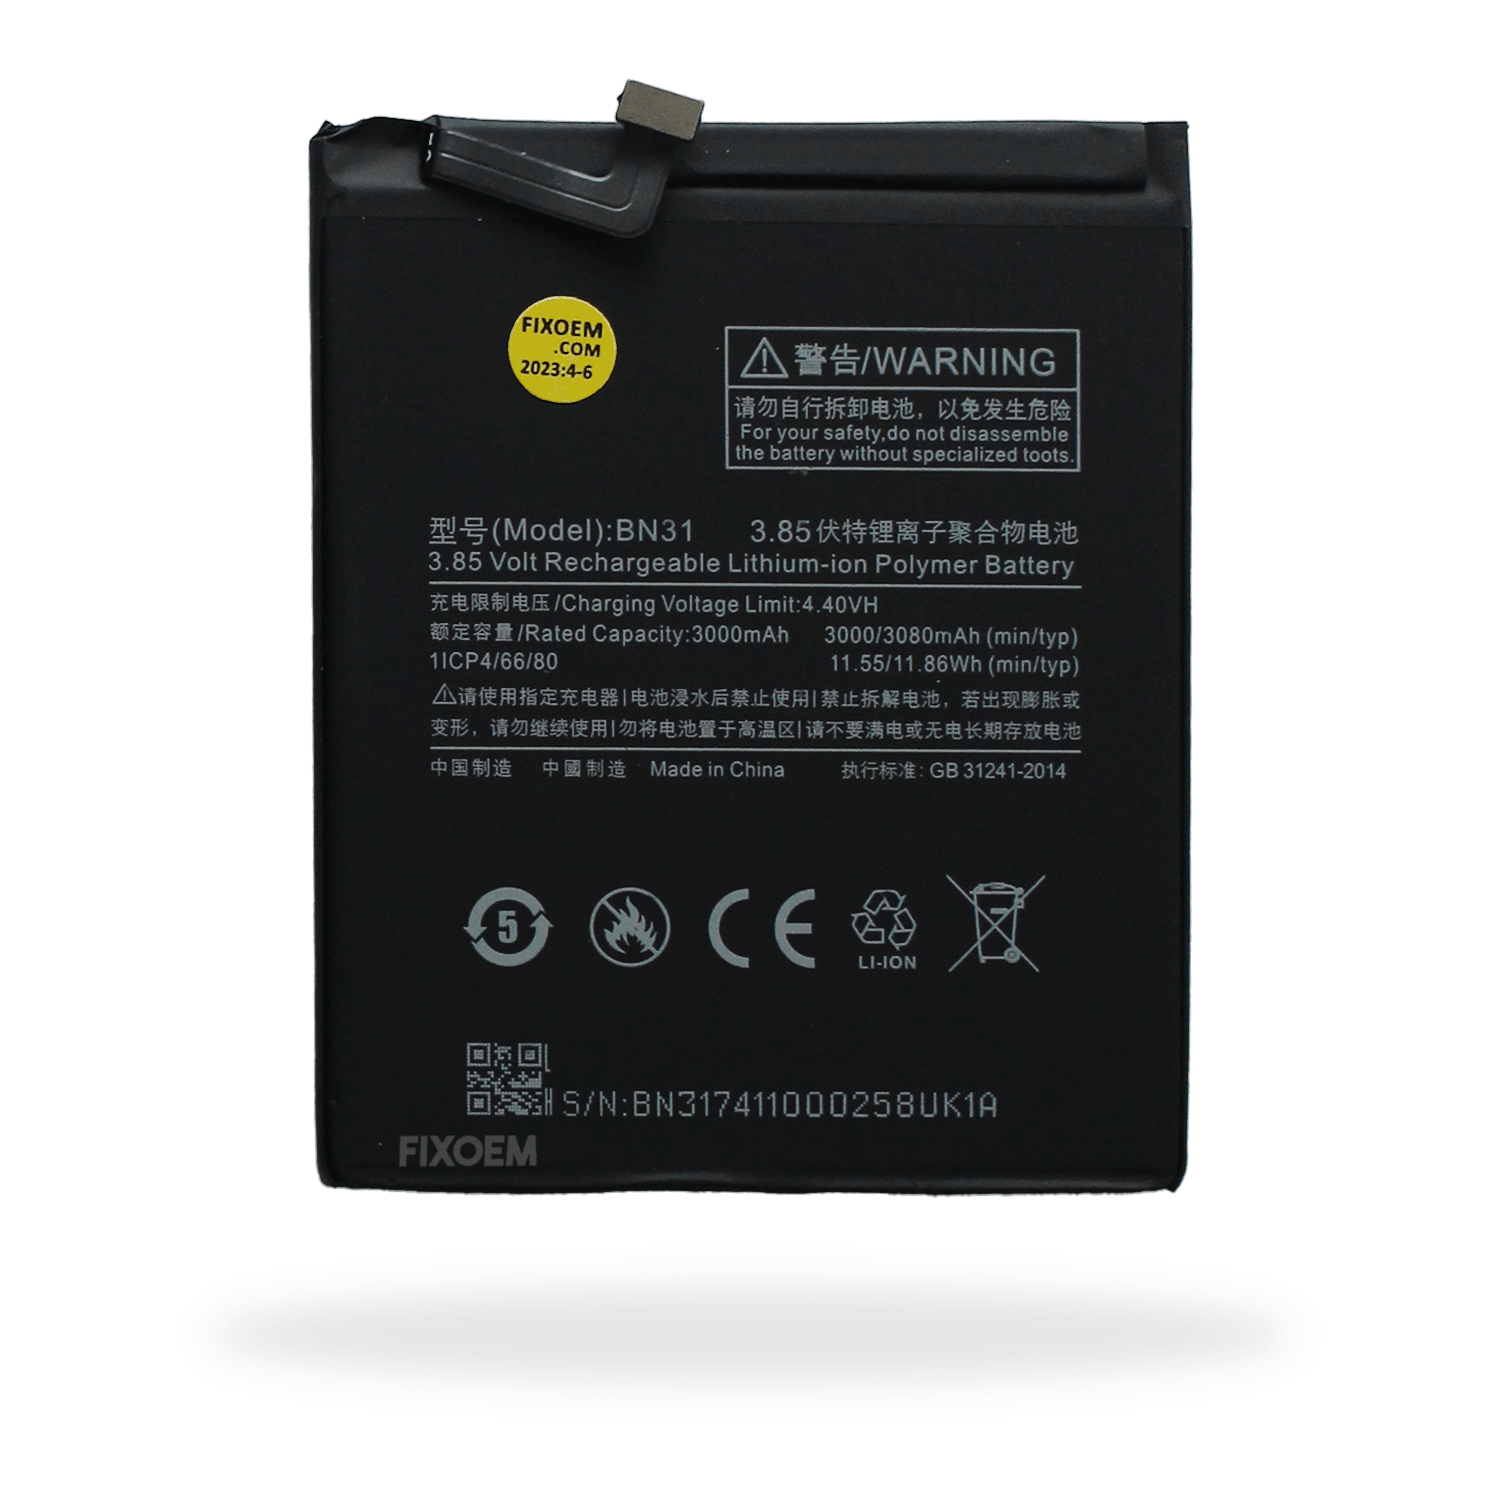 Bateria Xiaomi Redmi Note 5A / 5A Prime (Y1) / Mi 5X / Mi A1 (Mi 5X) / Redmi S2(Y2) MDT6 MDE6 MDG6S MDE6S ODM2 MDI2 M1803E6G M1803E6H M1803E6I Bn31 / refaccion celular / fixoem